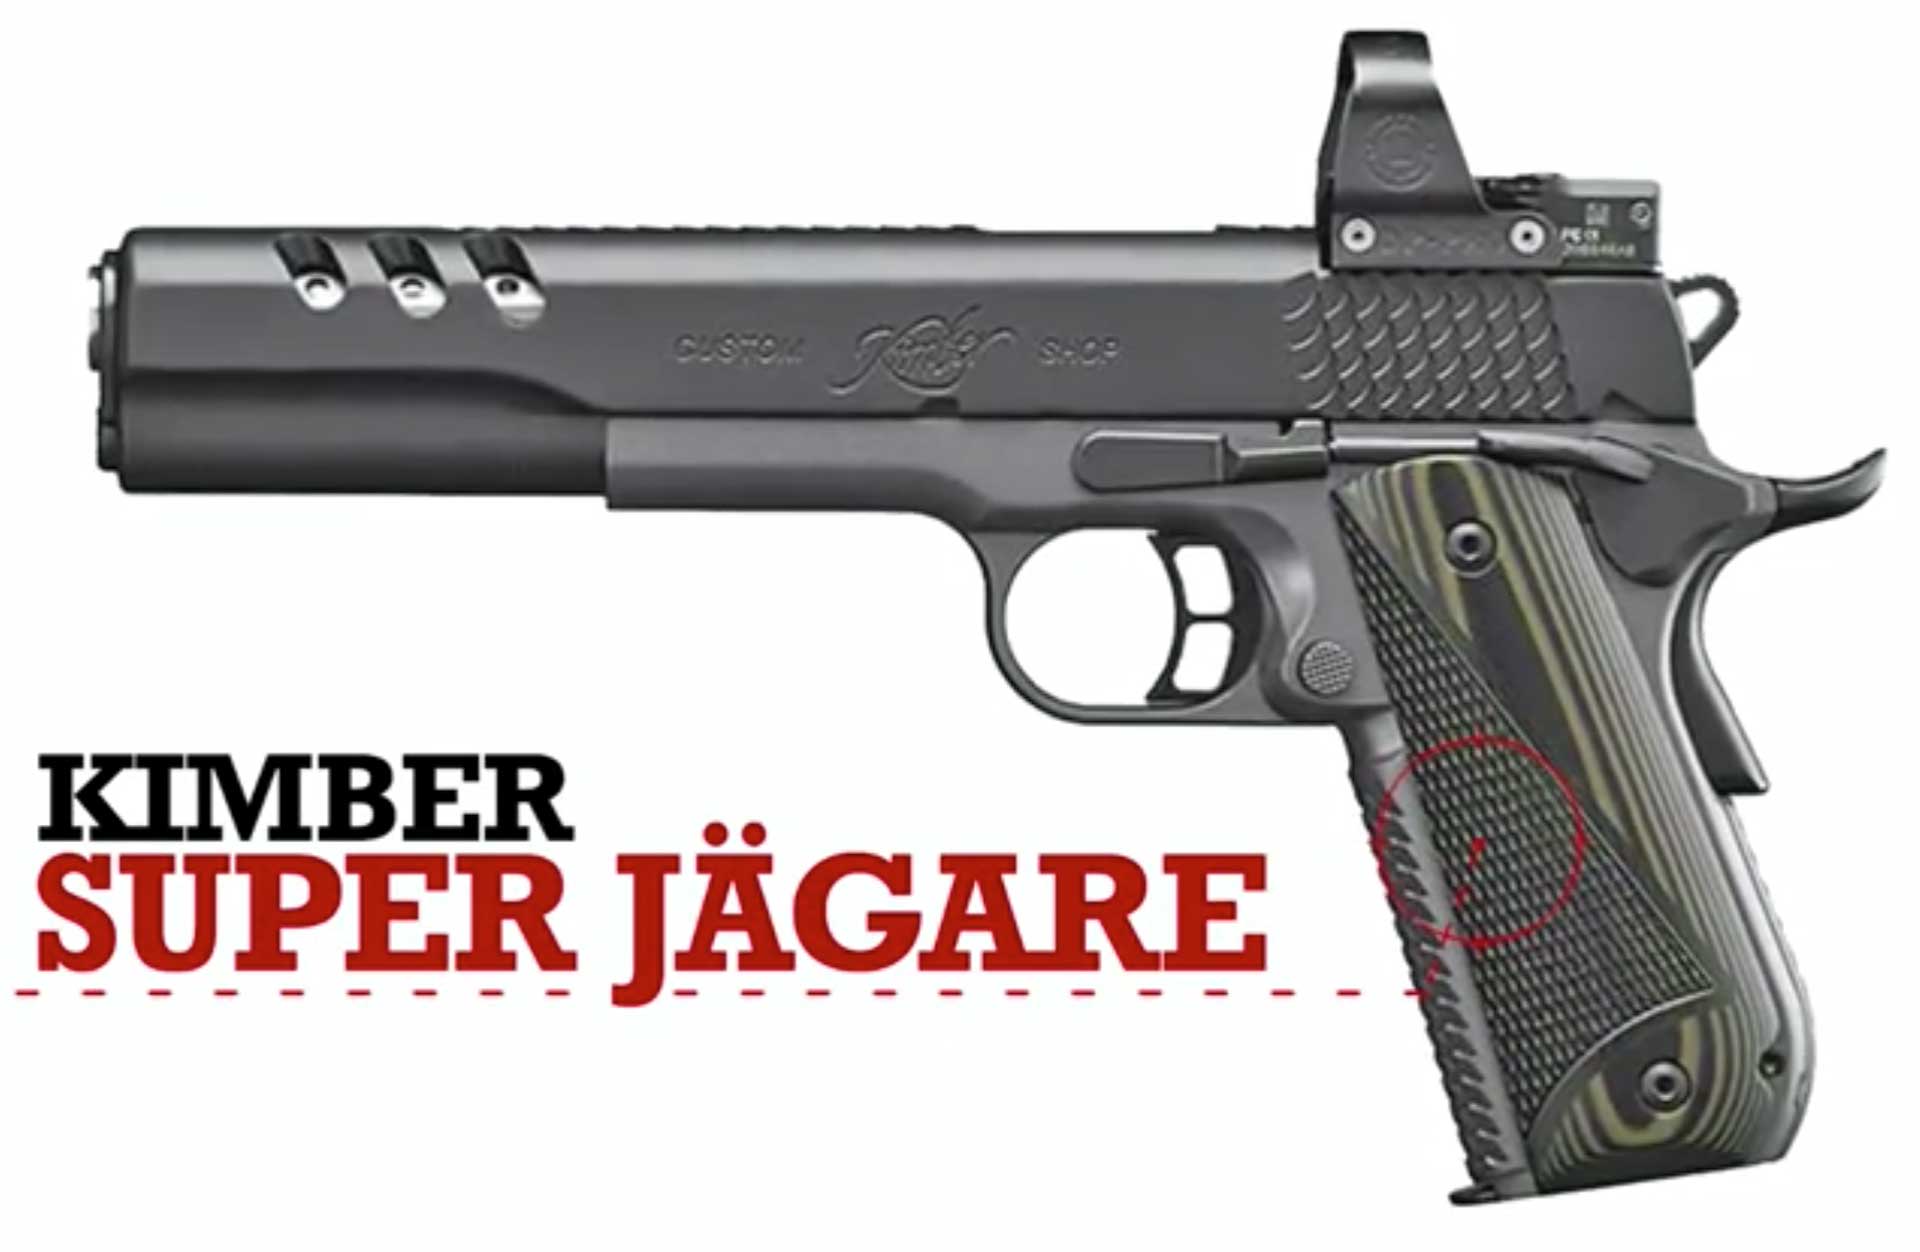 pistol left side two-tone optic metal steel micarta text on image noting make and model "Kimber Super Jagare"